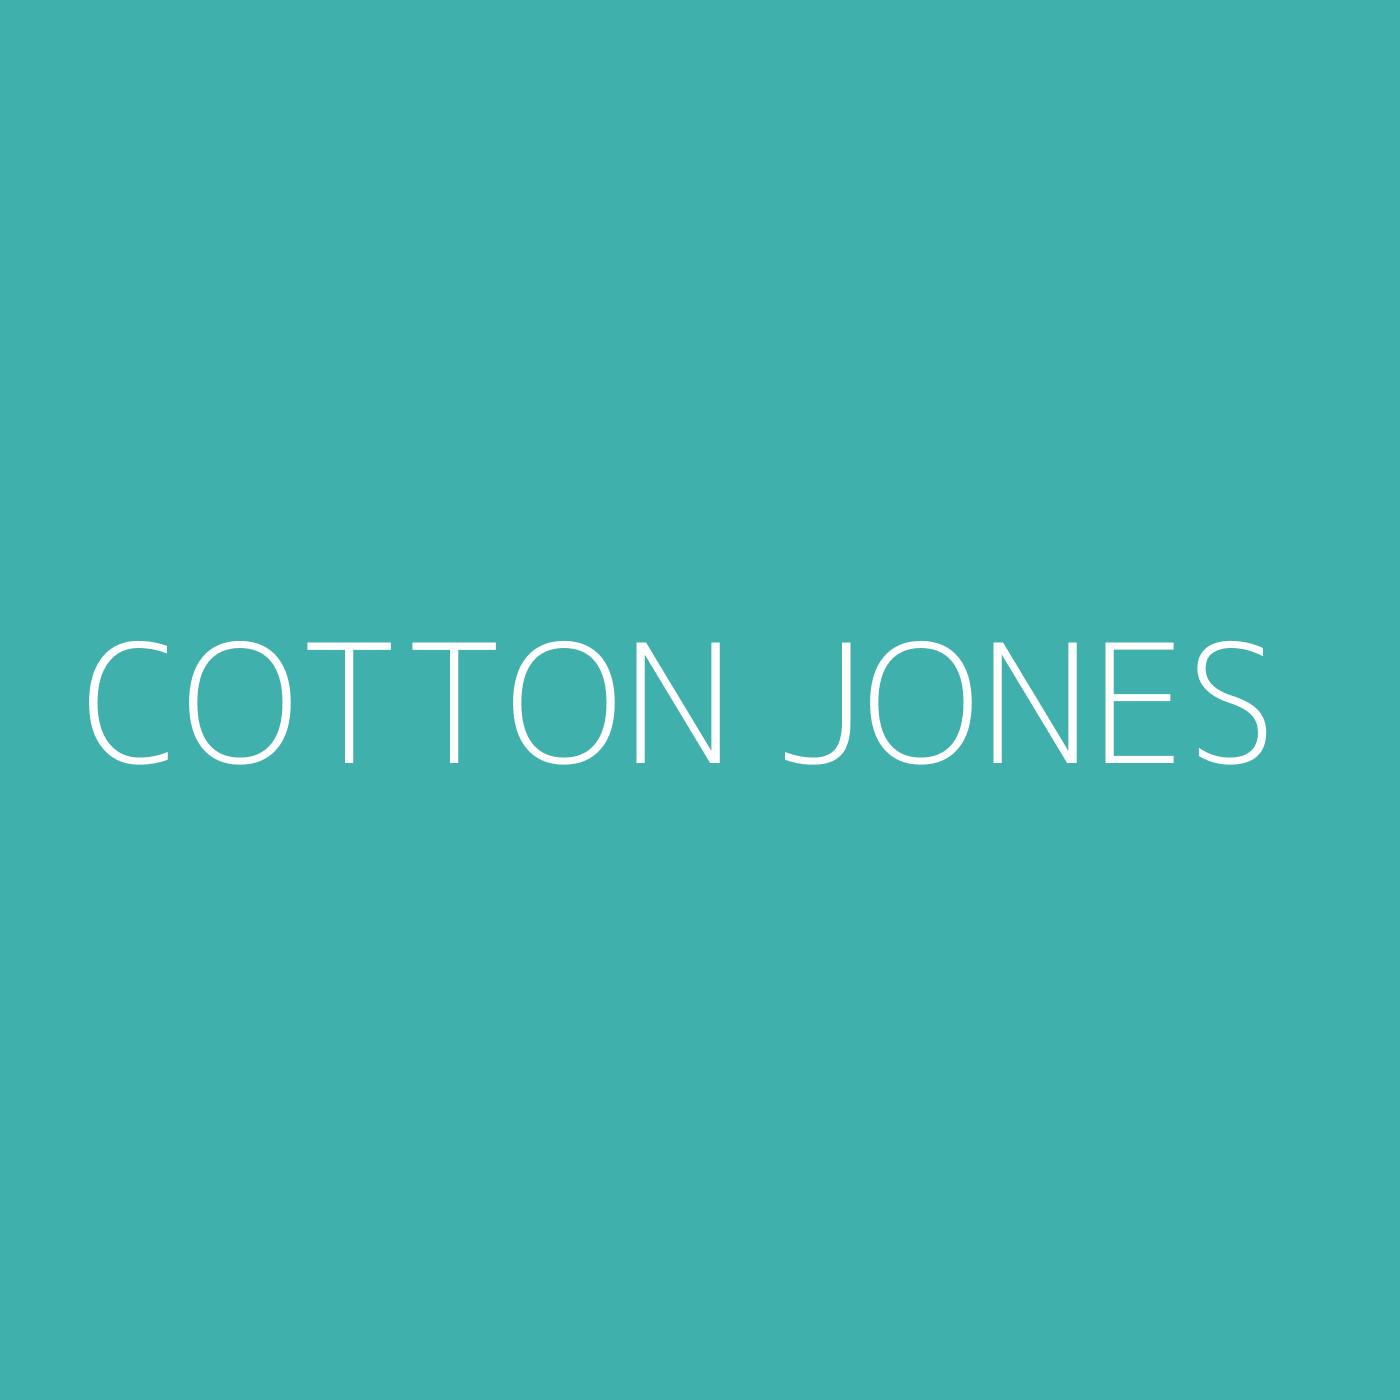 Cotton Jones Playlist Artwork